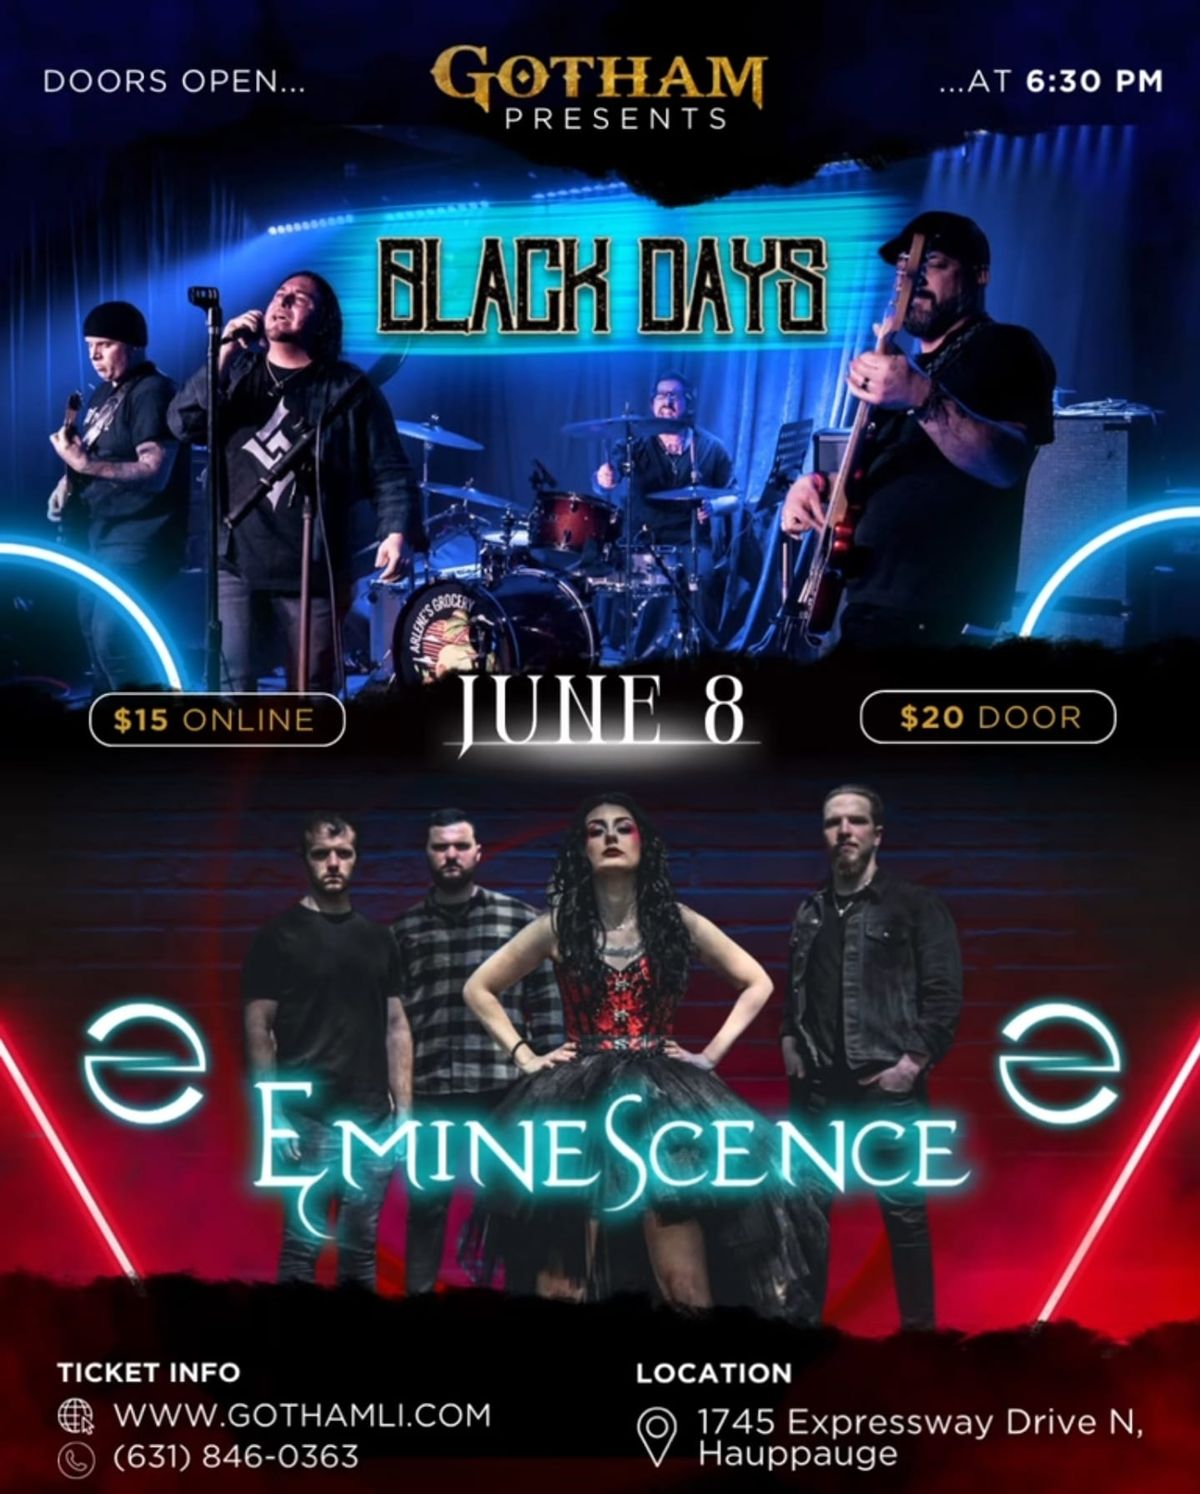 Black Days & Eminescence at Gotham!